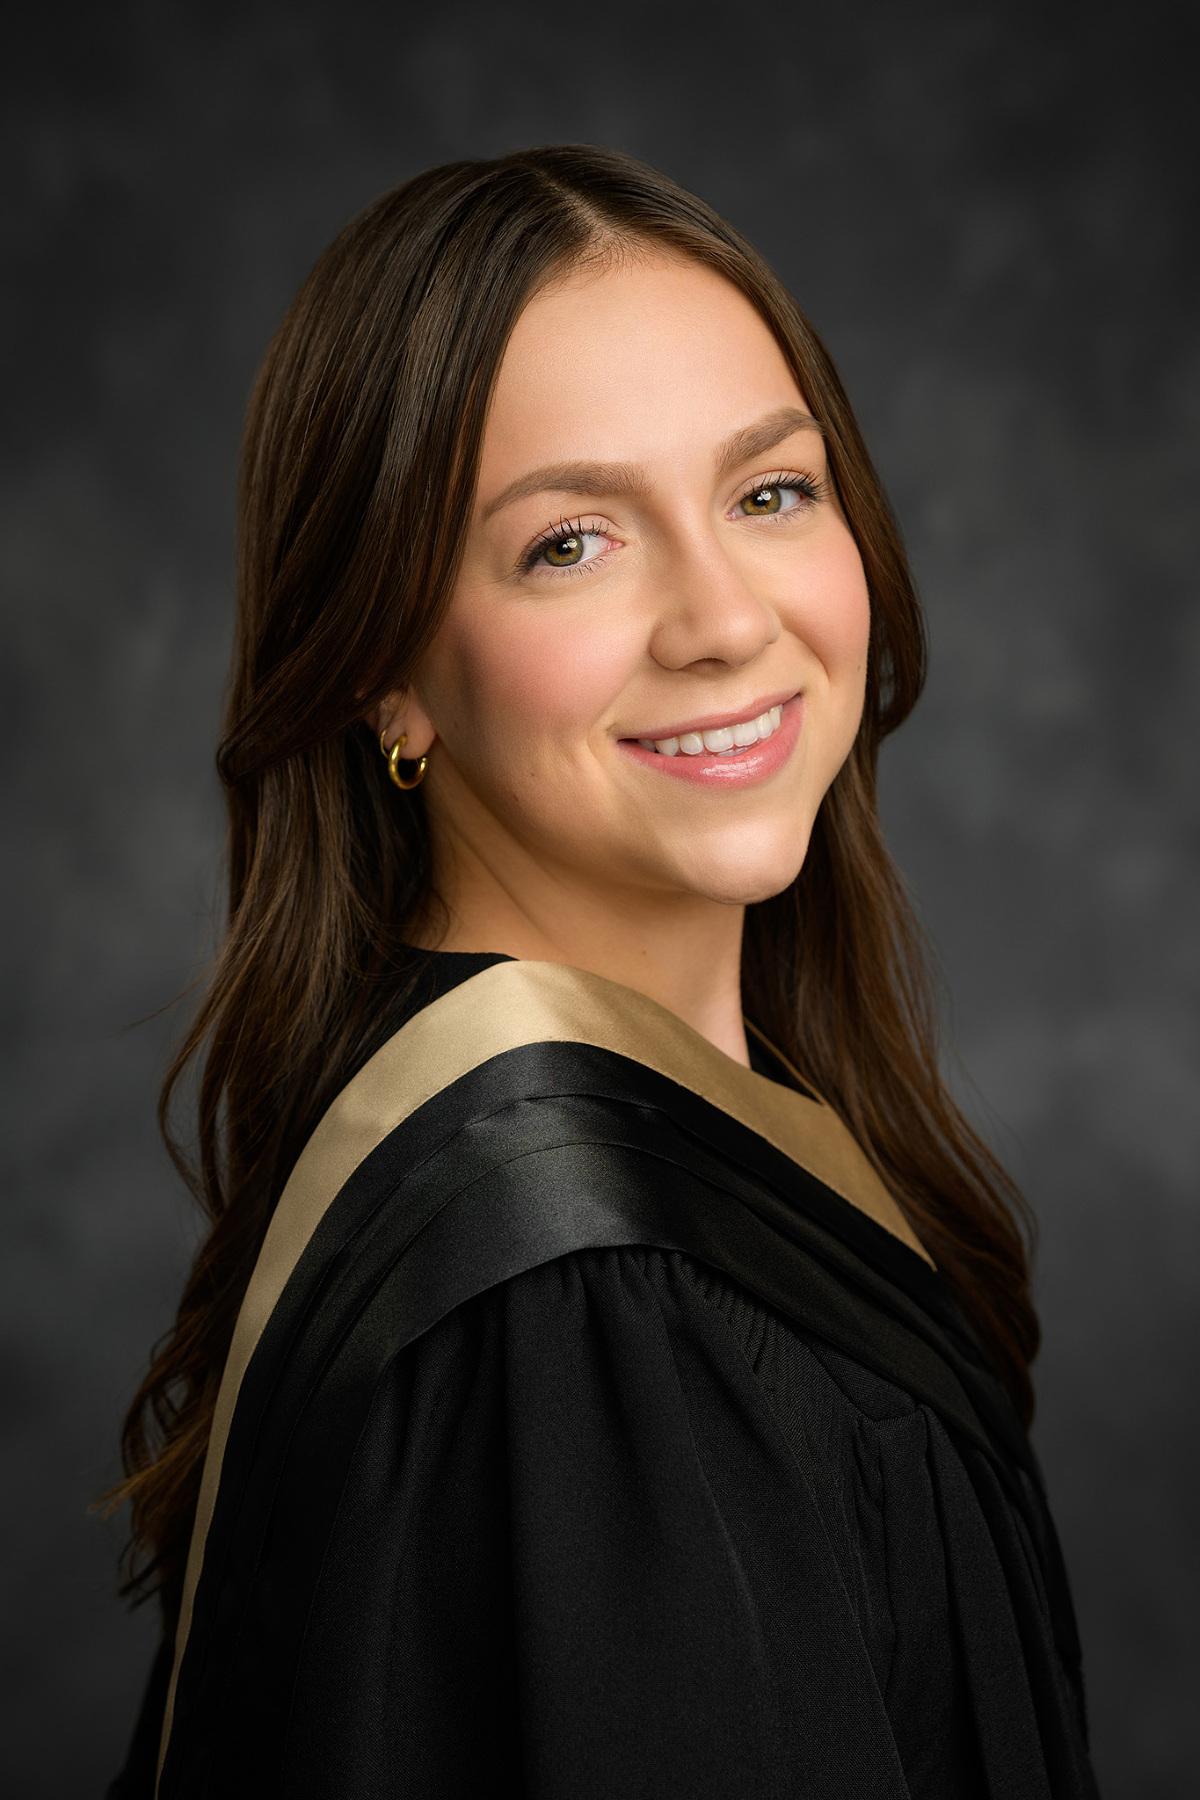 Traditional graduation portrait of female university student